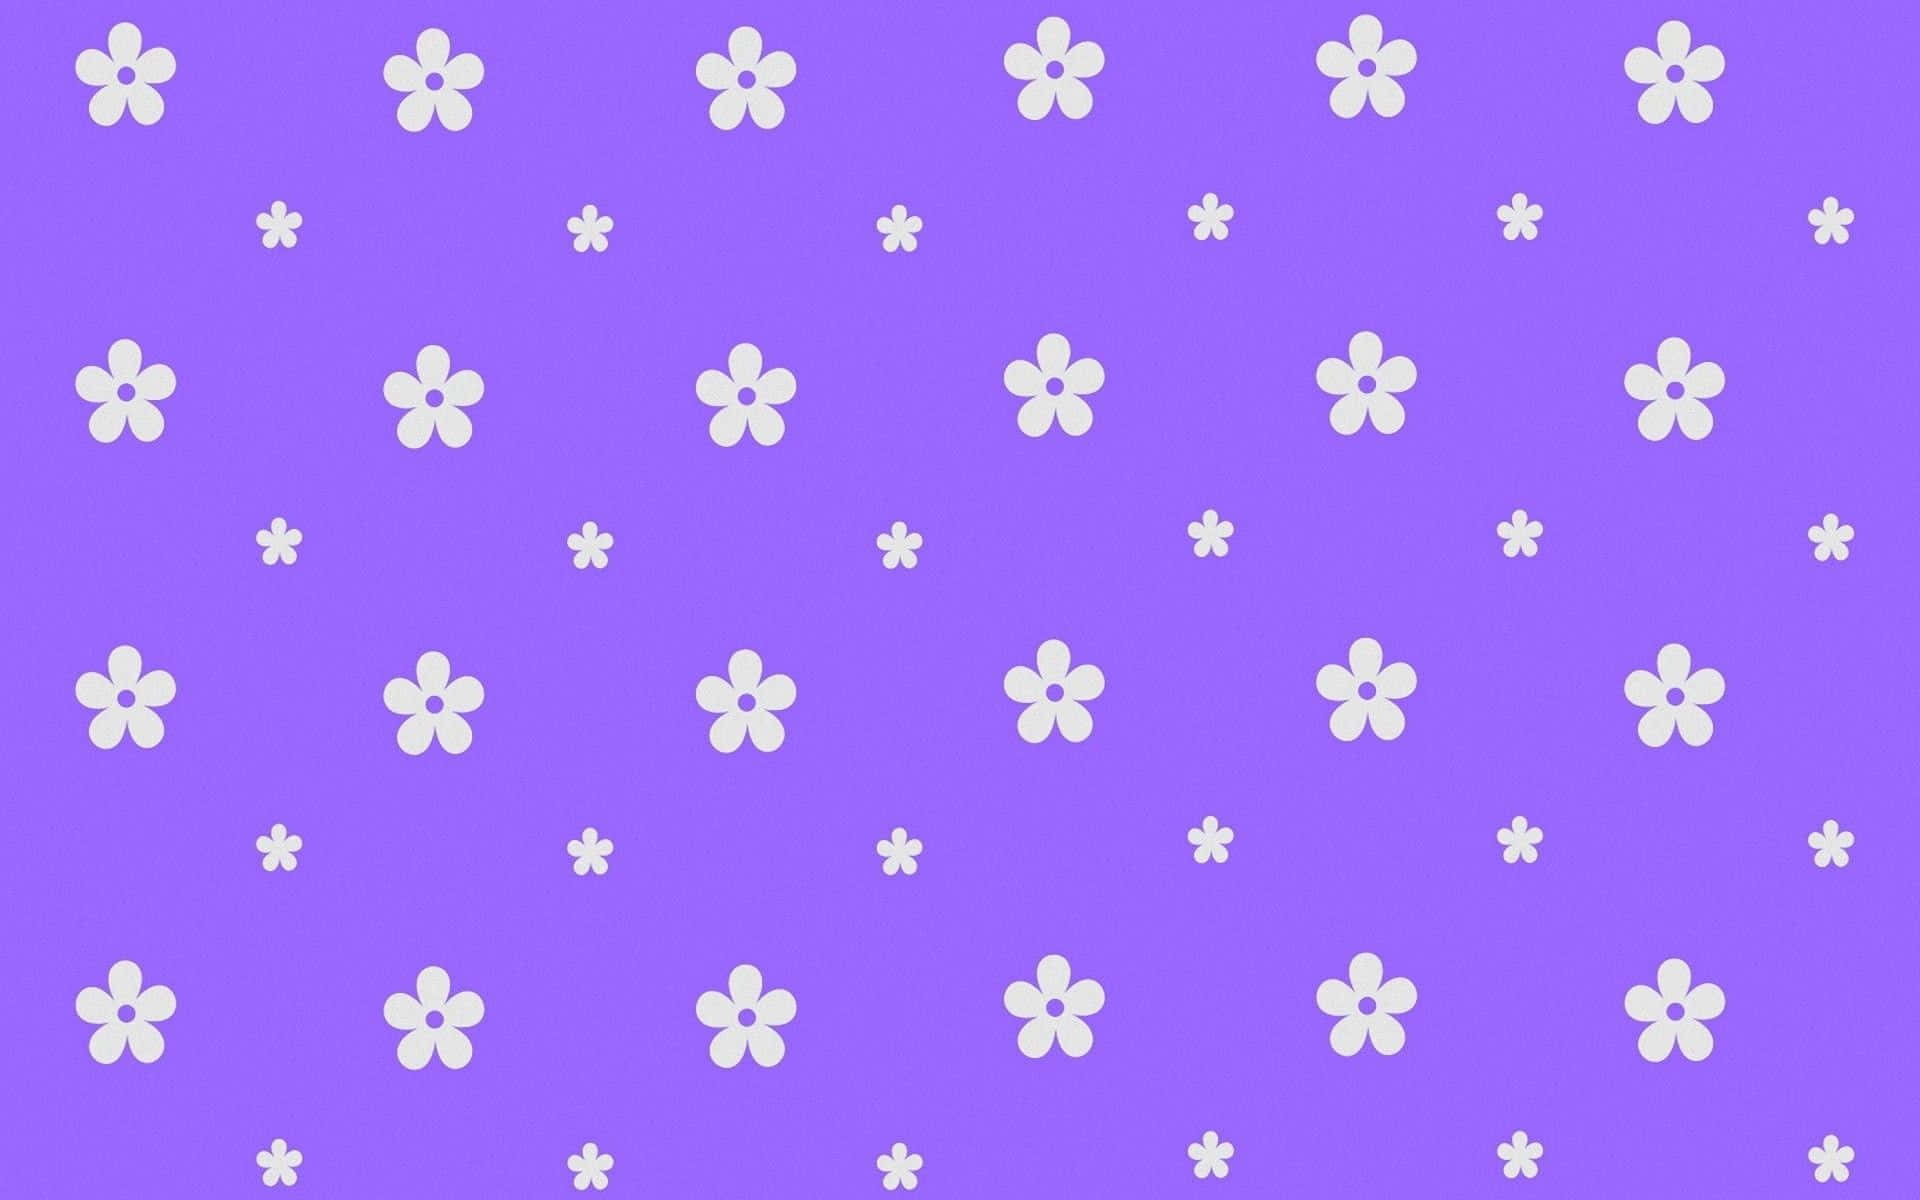 Captivating Purple Gradient Background